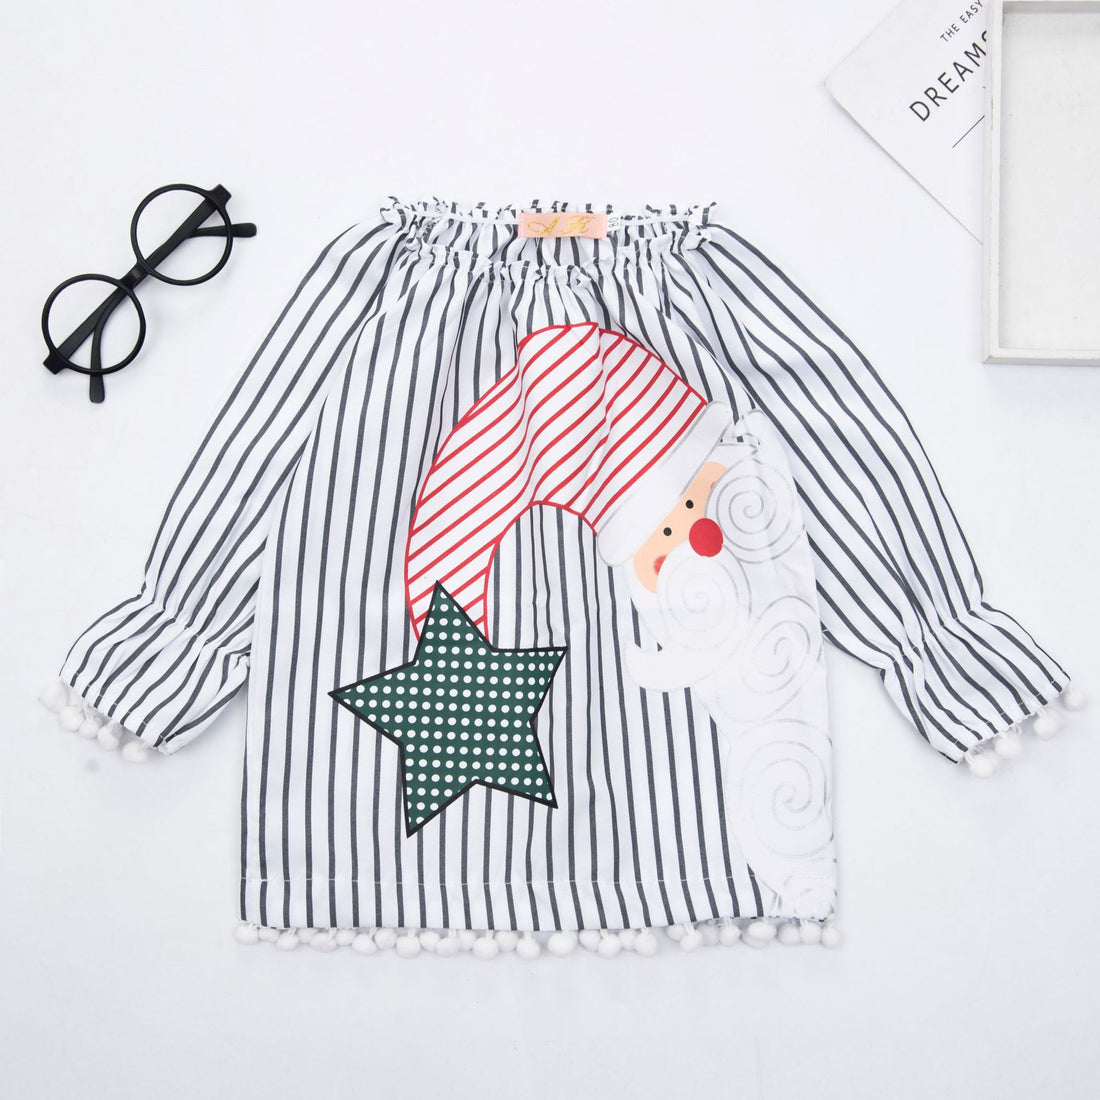 [363382] - Atasan Baju Natal Blouse Tunik Fashion Anak Perempuan Import - Motif Santa Claus Star